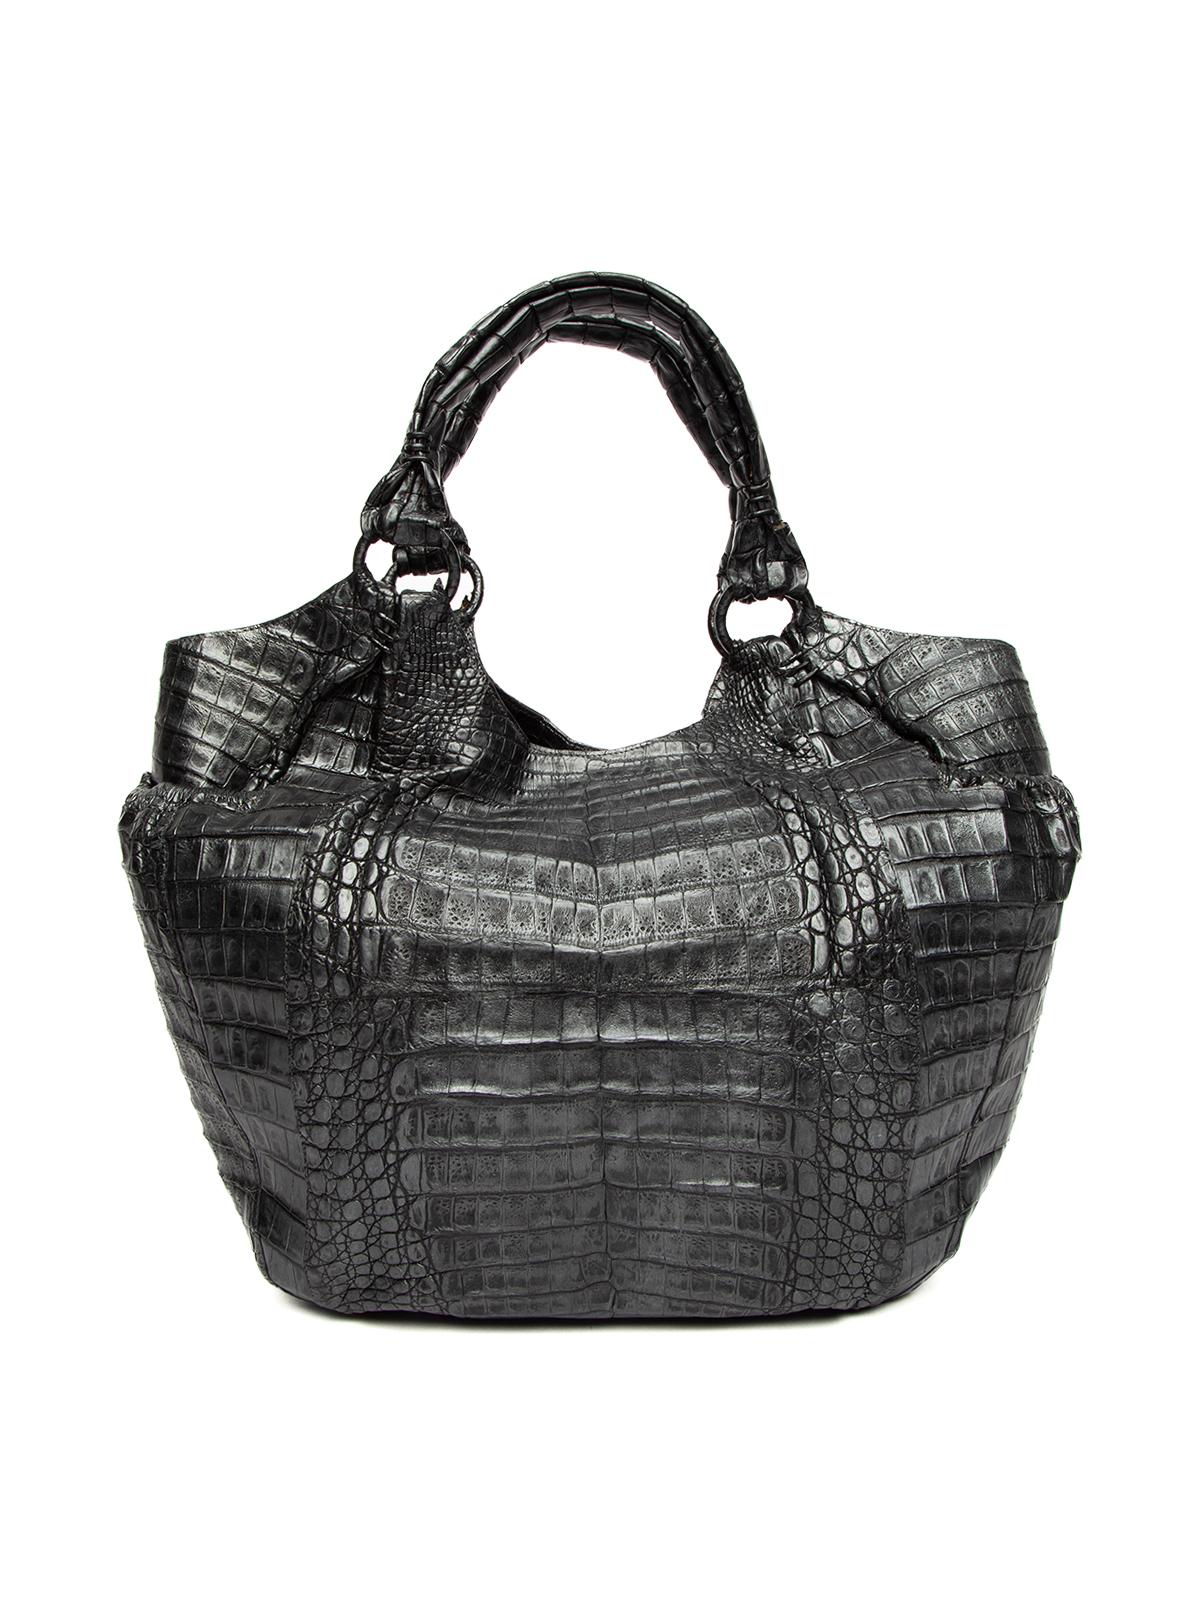 Black Pre-Loved Nancy Gonzalez Women's Crocodile Leather Handbag